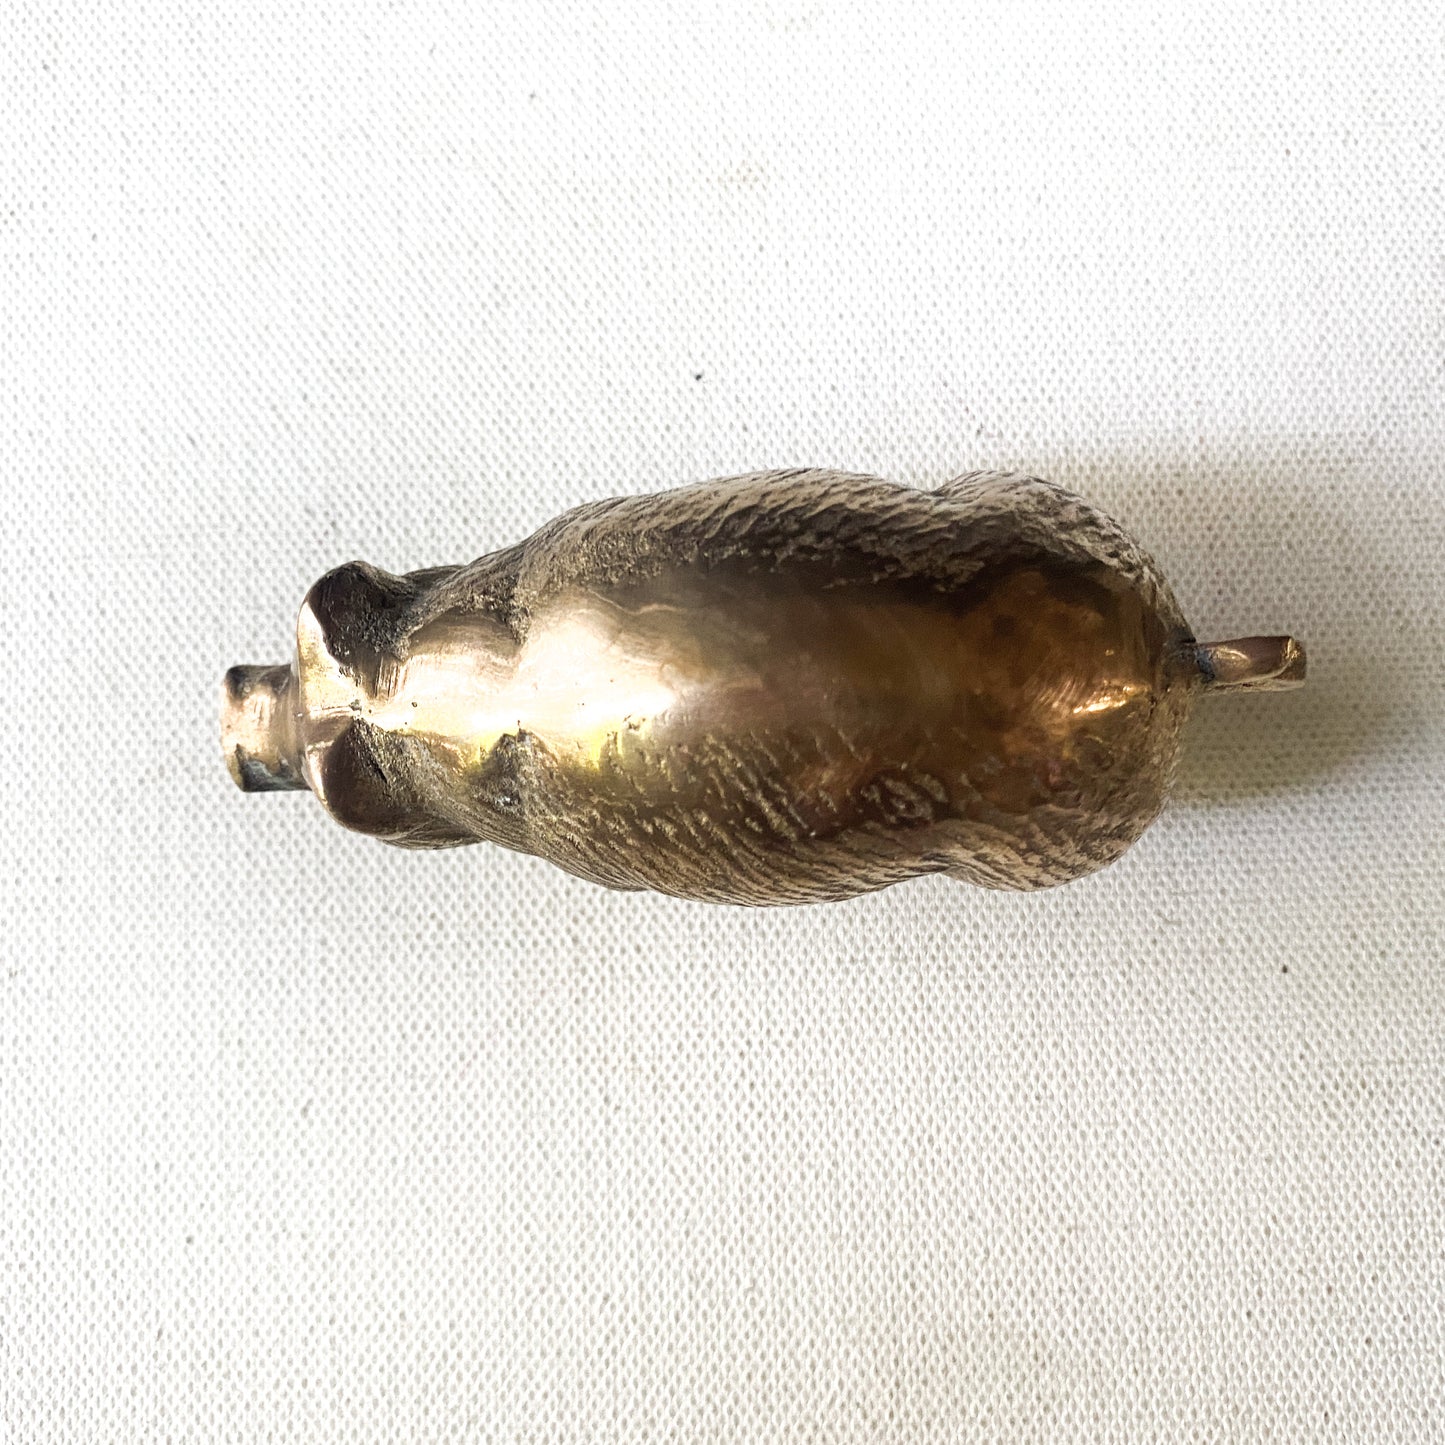 Vintage small brass pig figurine